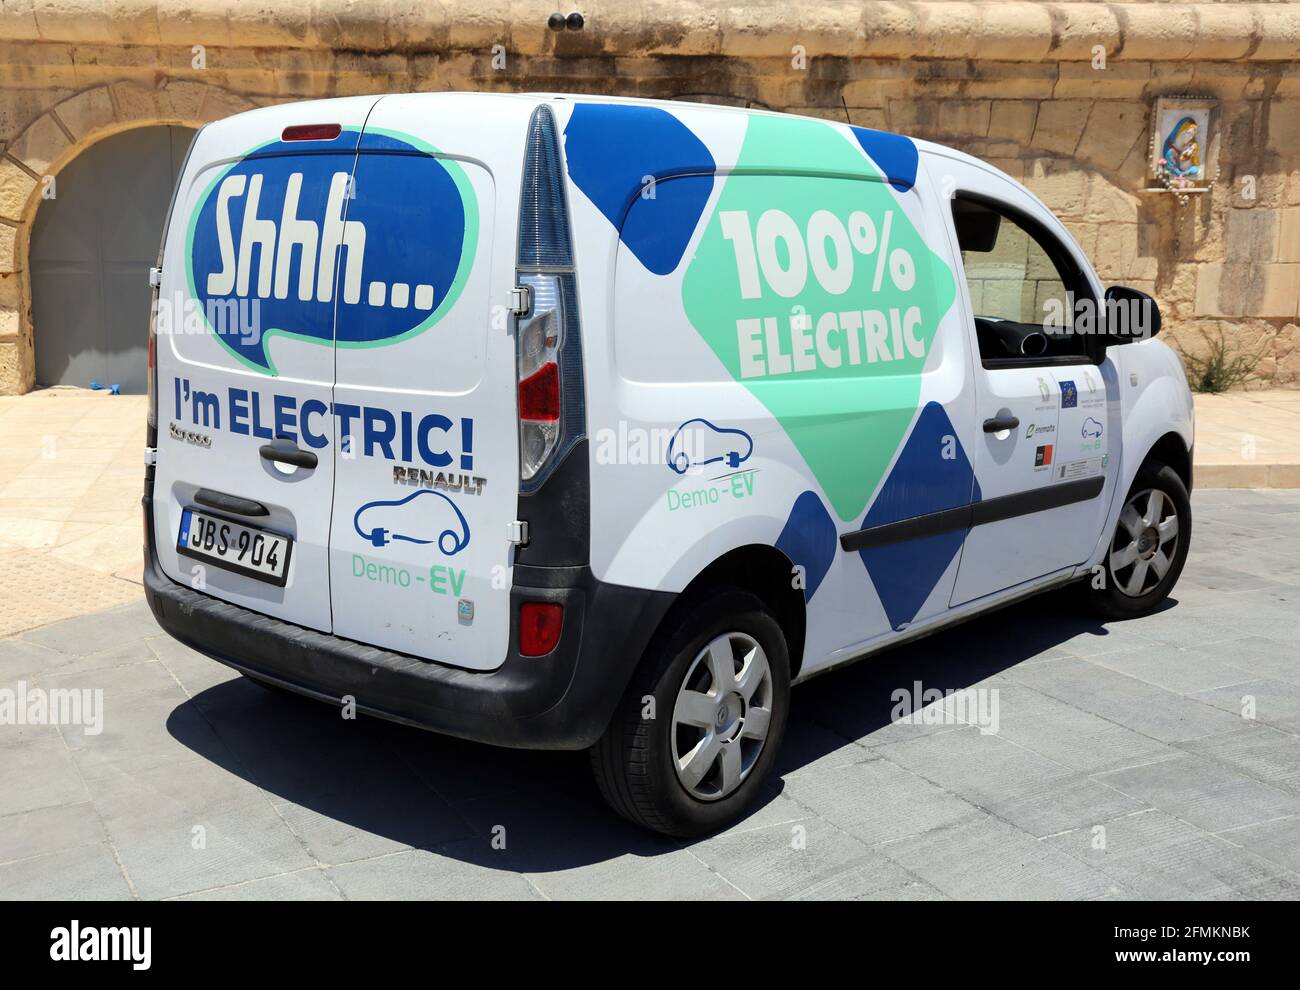 Velletta. Malta. Renault electric van parked on the street Stock Photo -  Alamy